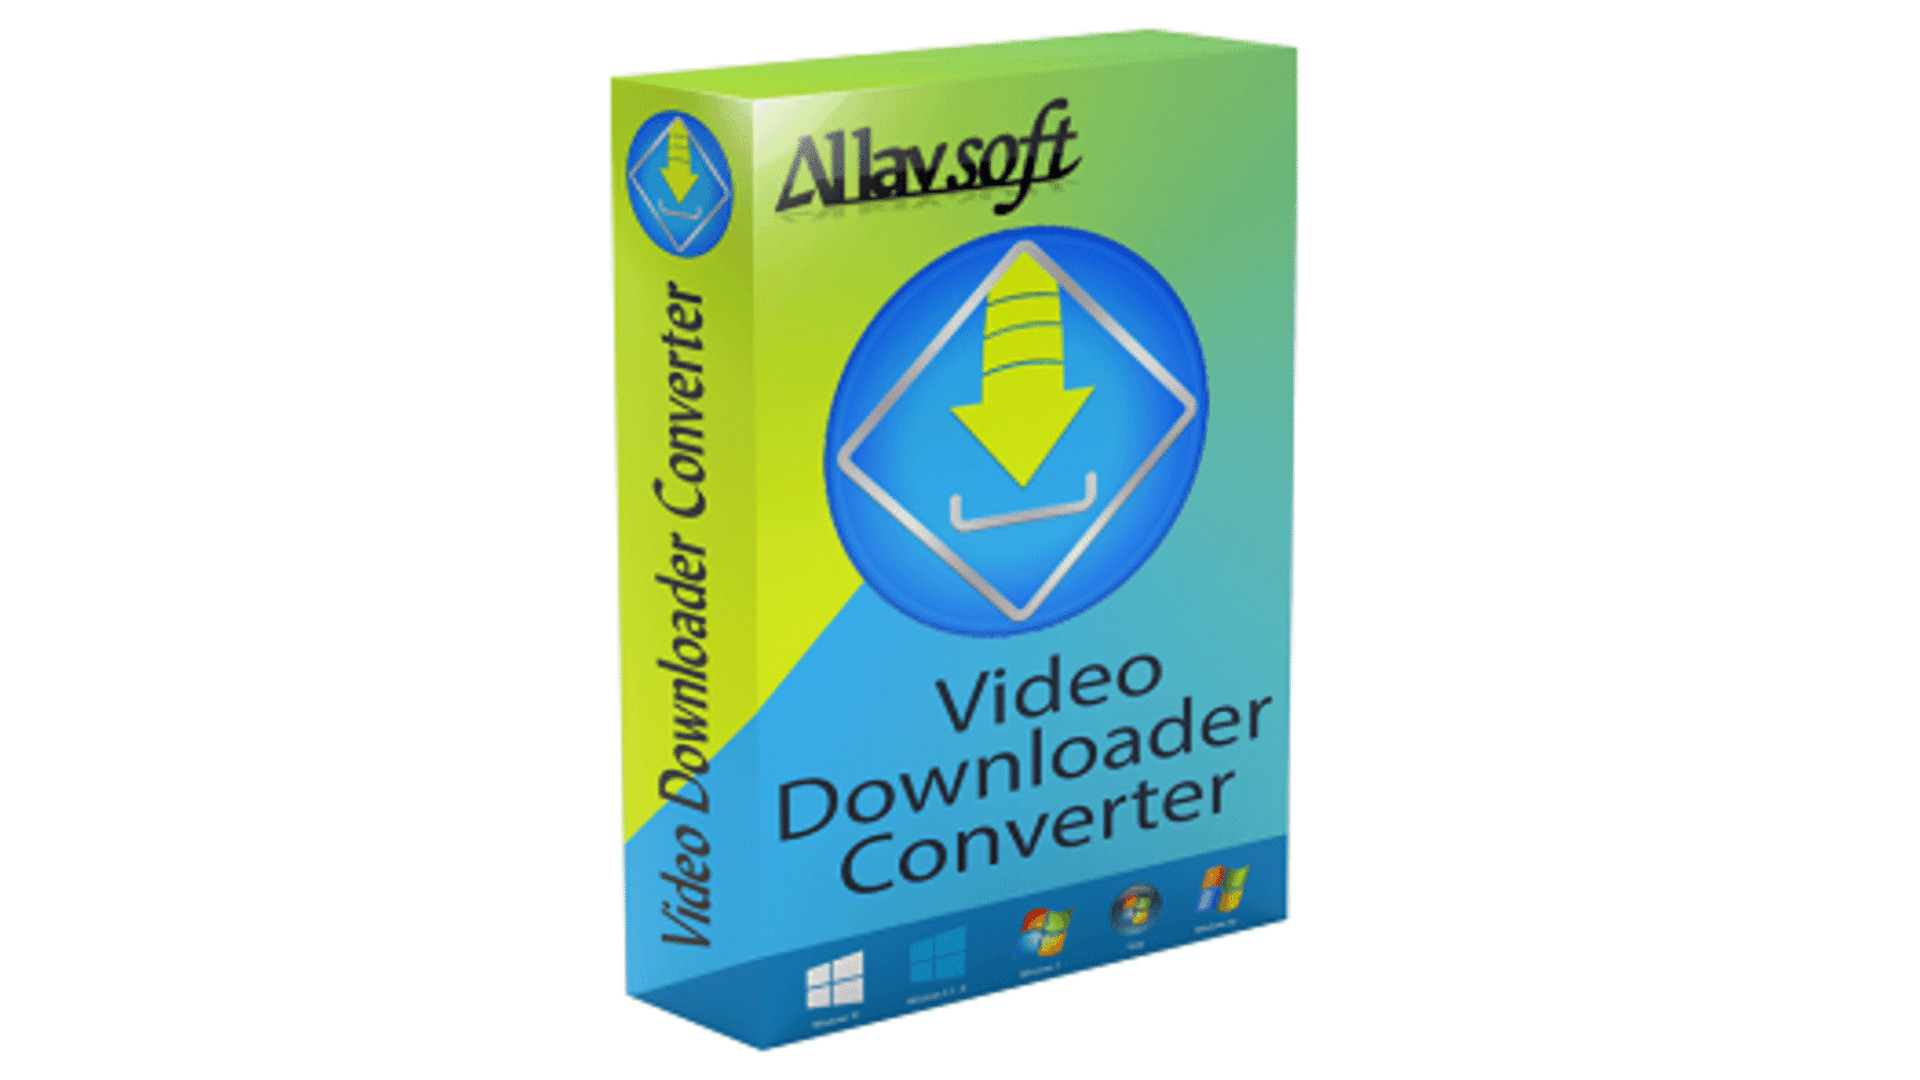 Allavsoft Video Downloader and Converter for Windows CD Key $2.75